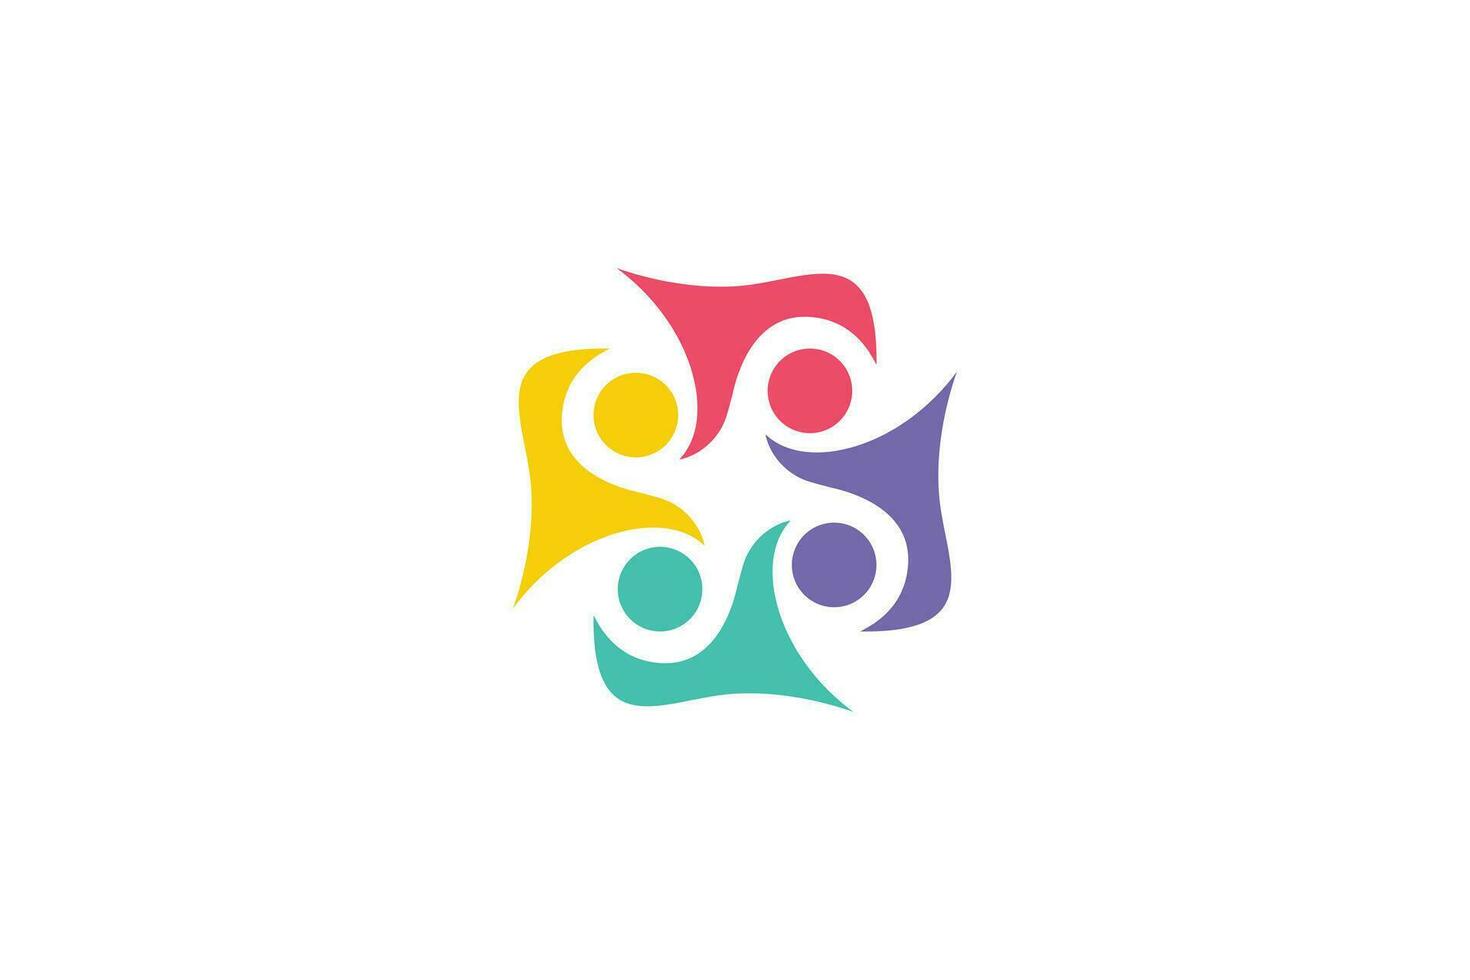 Community logo design for team with modern idea concept vector